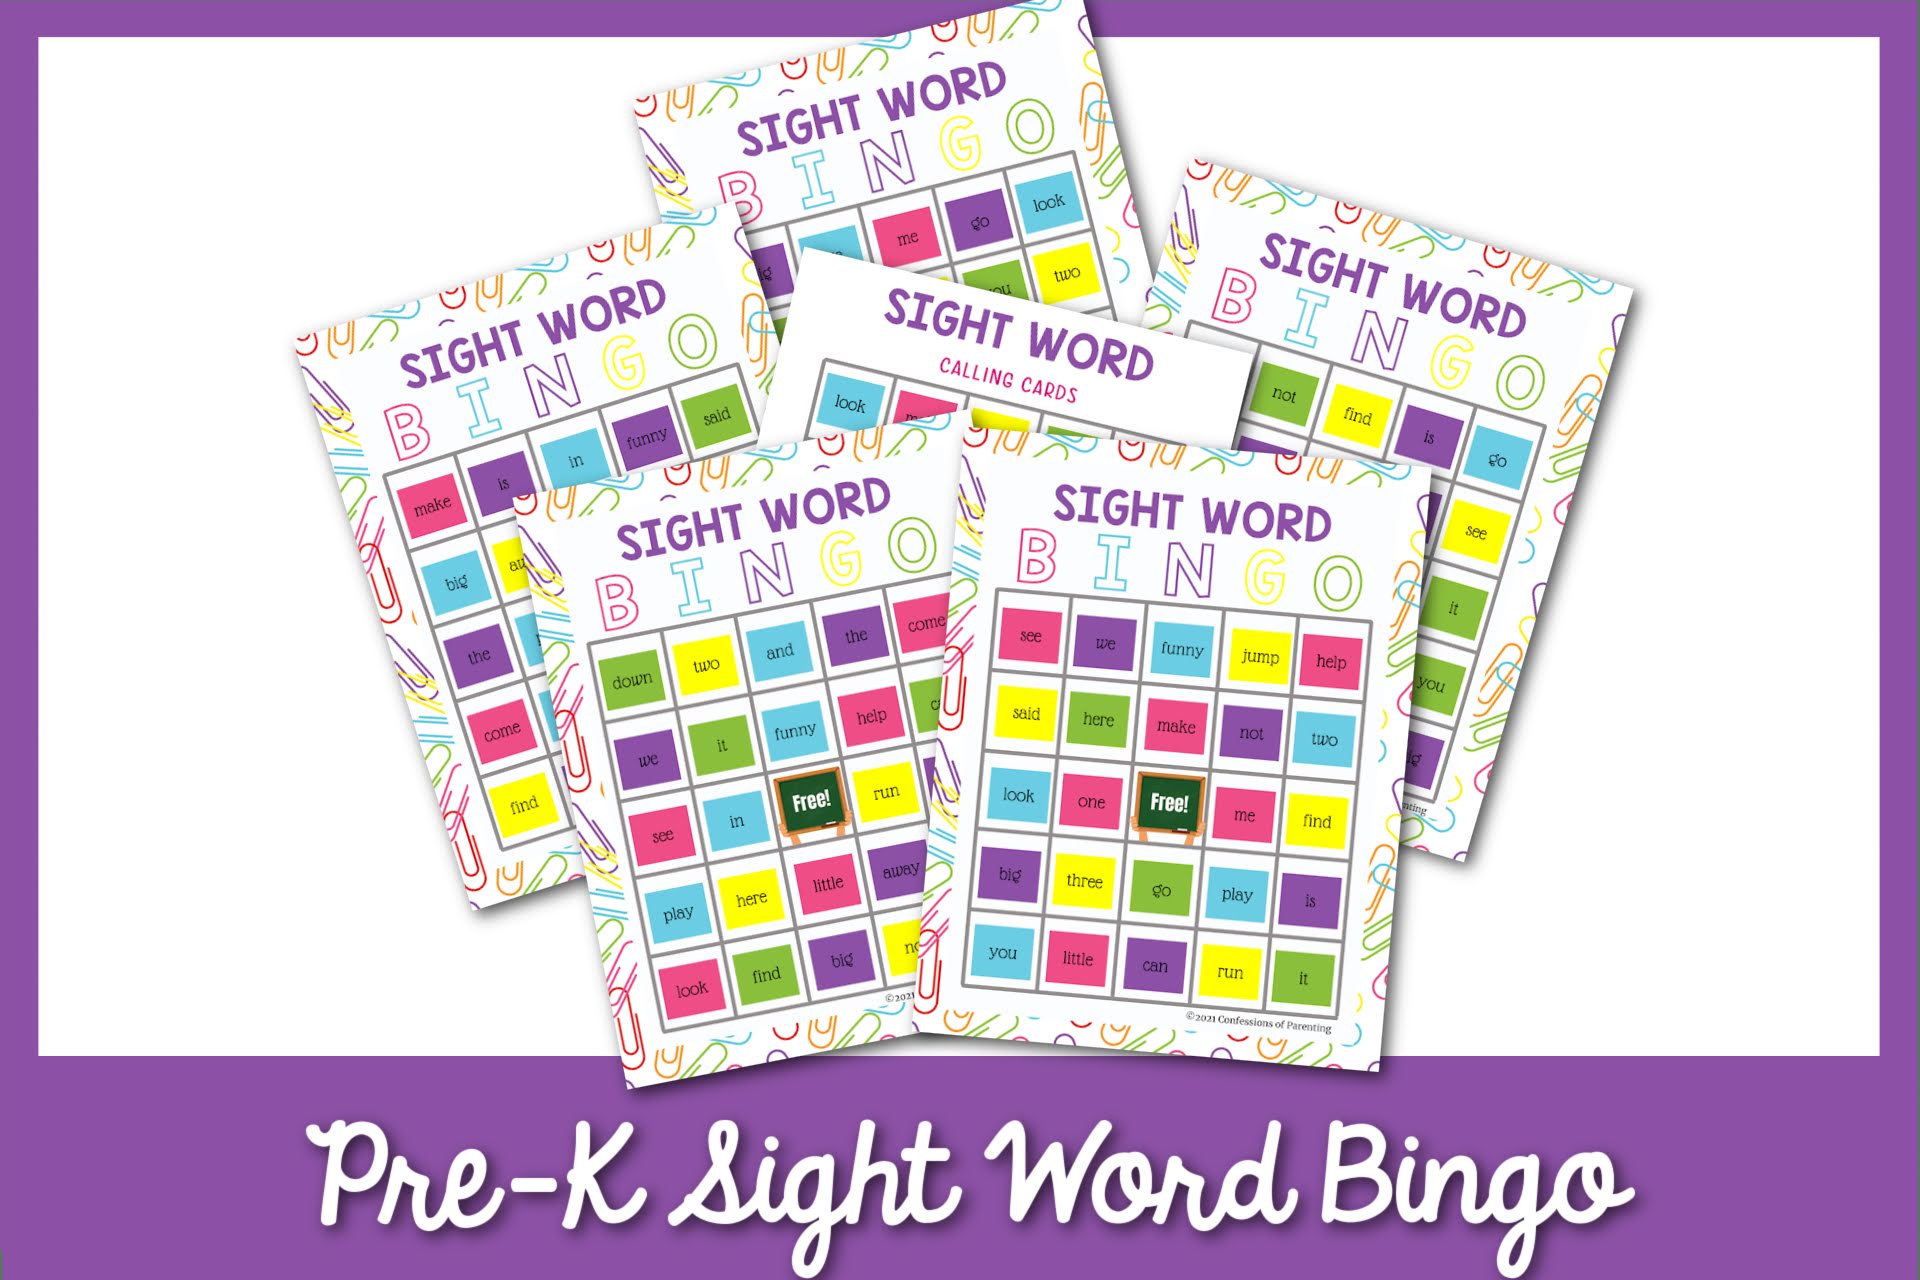 feature image: Pre-K Sight Word Bingo on a purple border